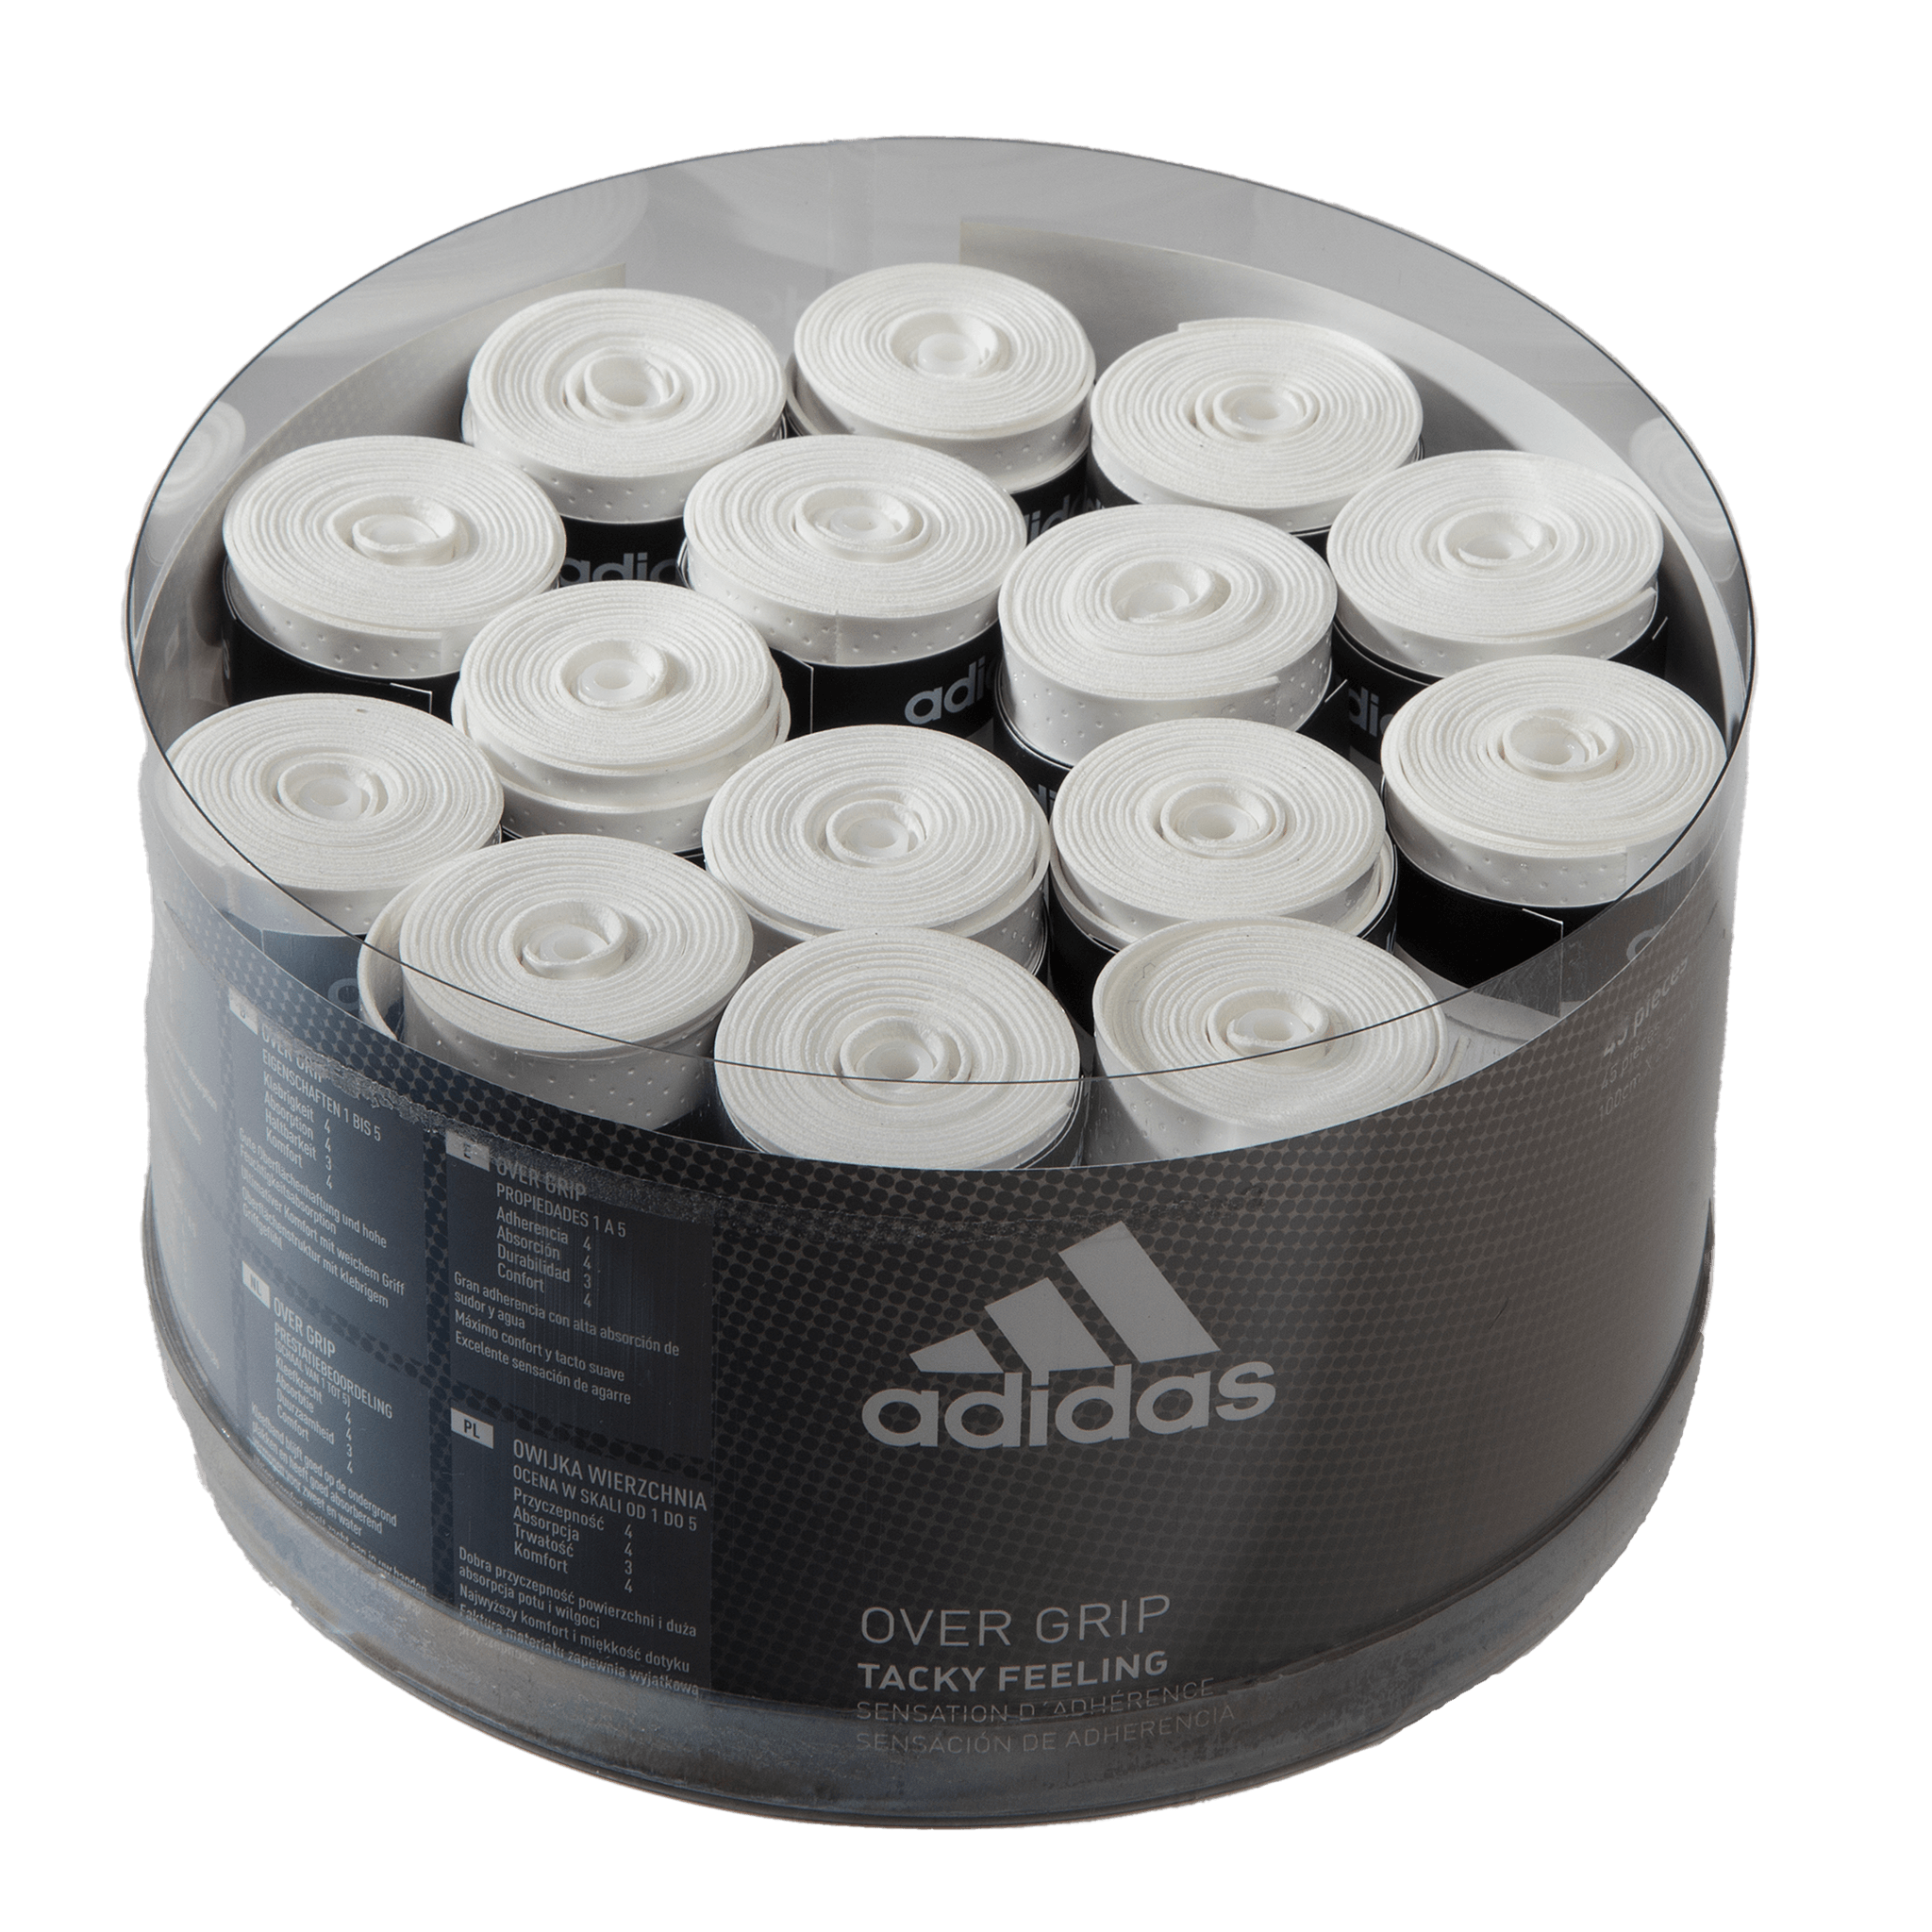 medallista Incienso plan adidas padel overgrip box 45 stuks wit | Alles voor Padel. – PadelAmigos